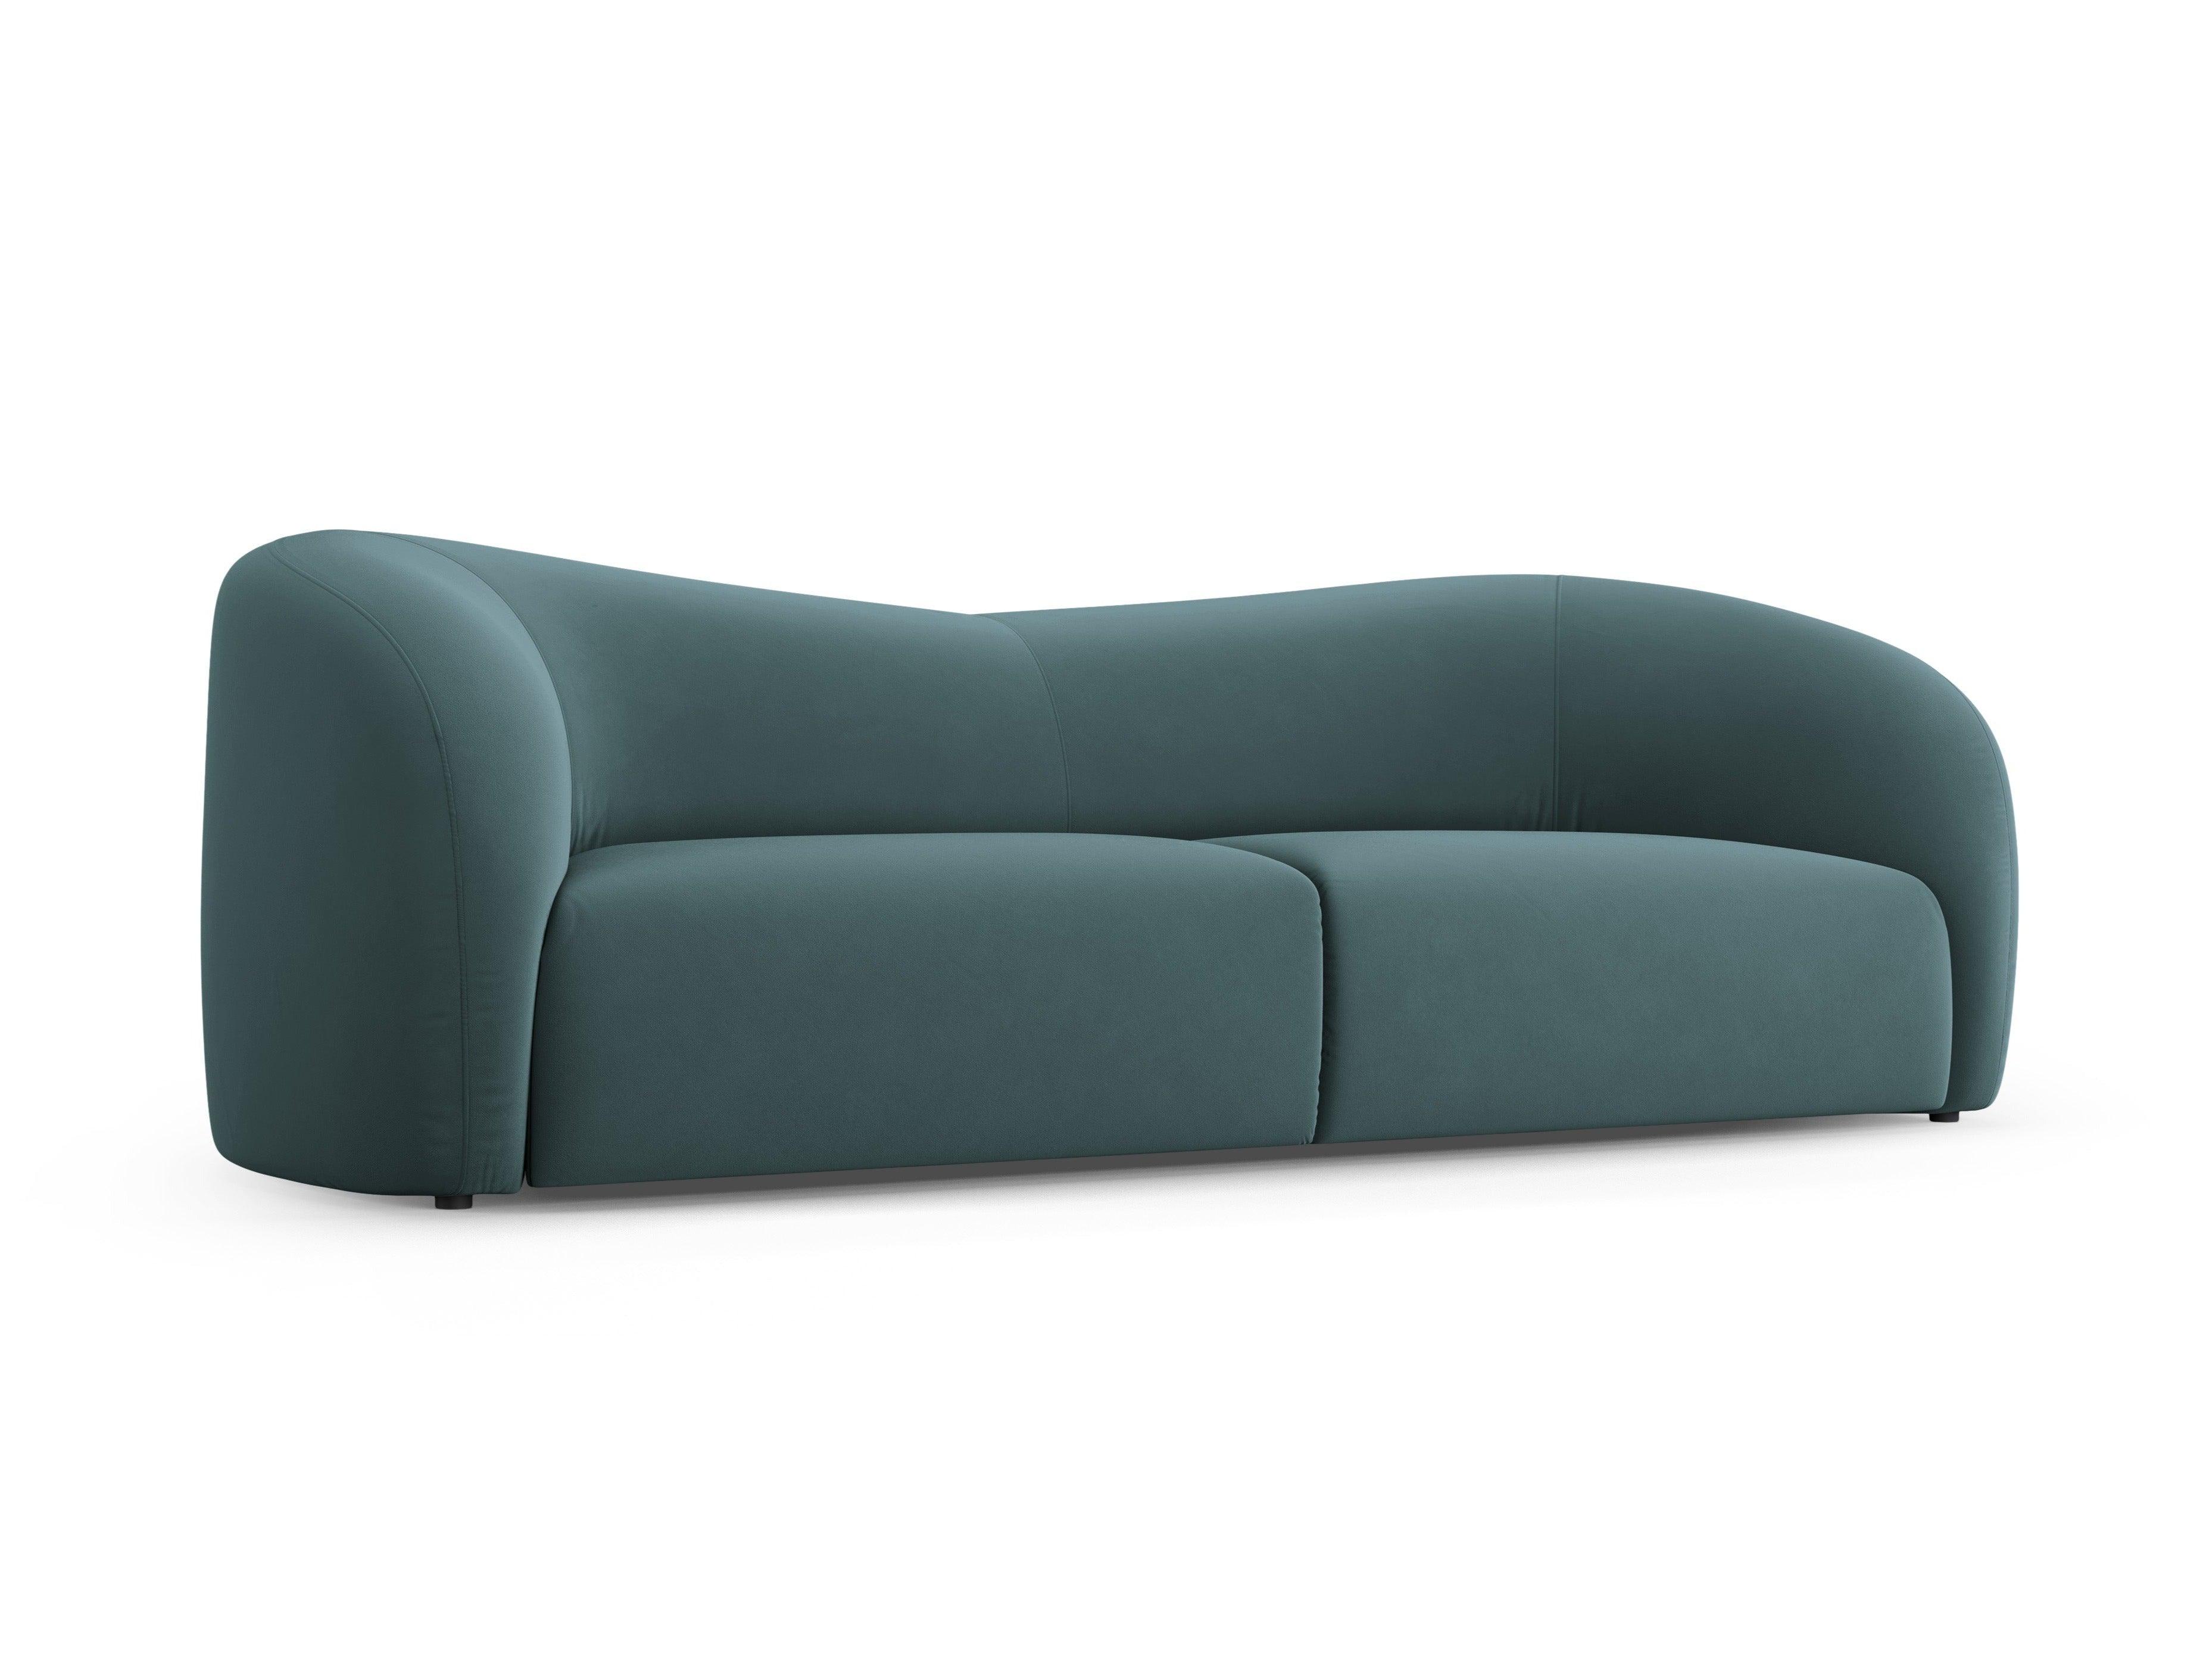 Velvet Sofa, "Santi", 3 Seats, Petrol, 237x90x75
Made in Europe Interieurs 86    Eye on Design